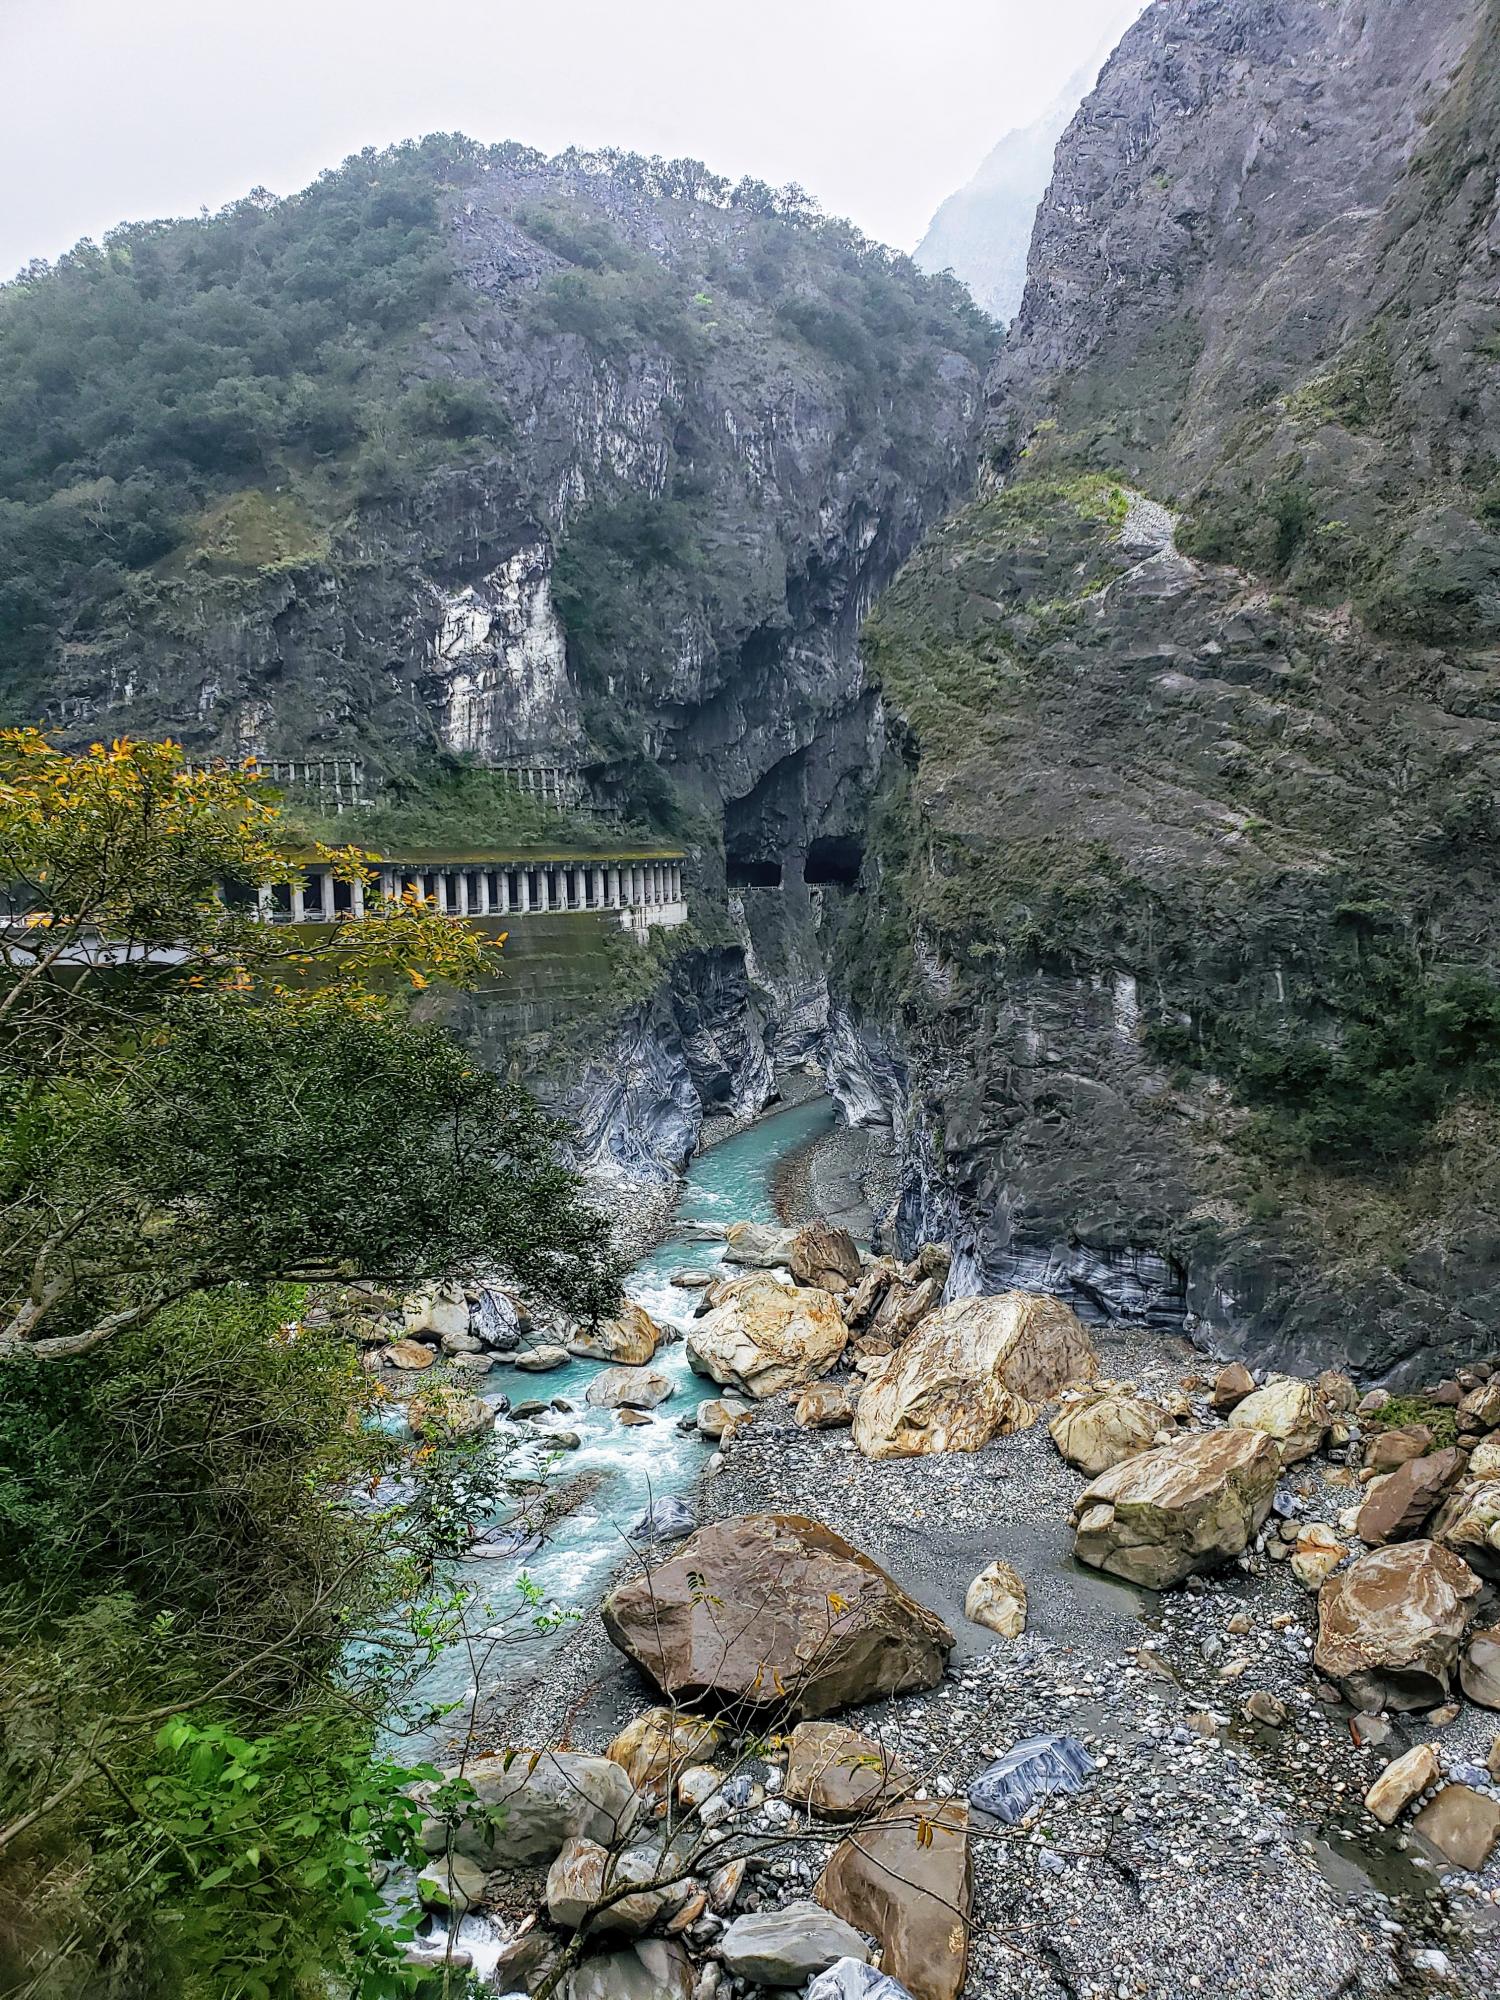 The Gorge in Taiwan